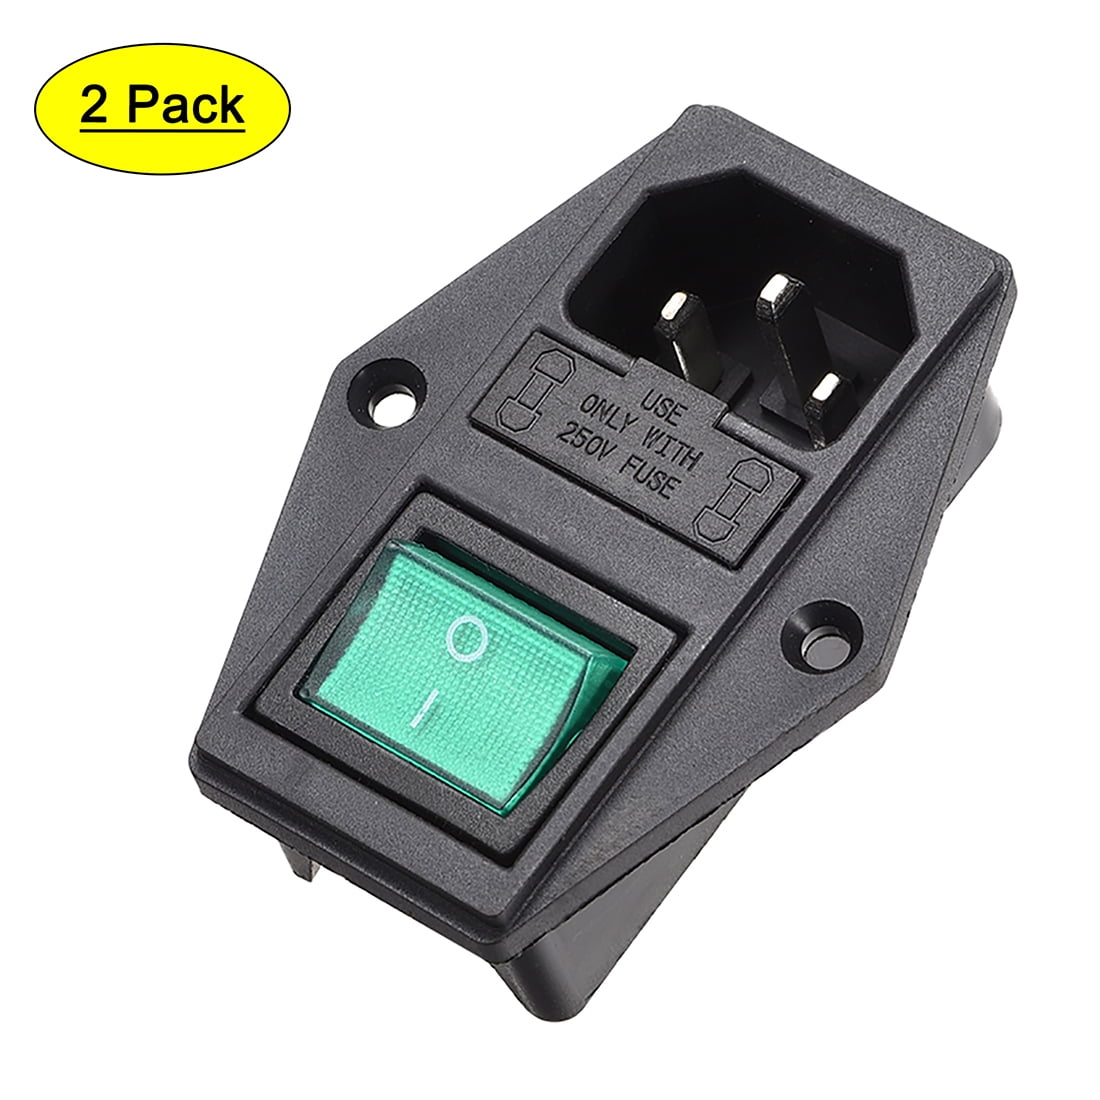 1x Green LED Rocker Switch Fuse Holder IEC320 C14 Inlet Power Socket AC250V 10A 